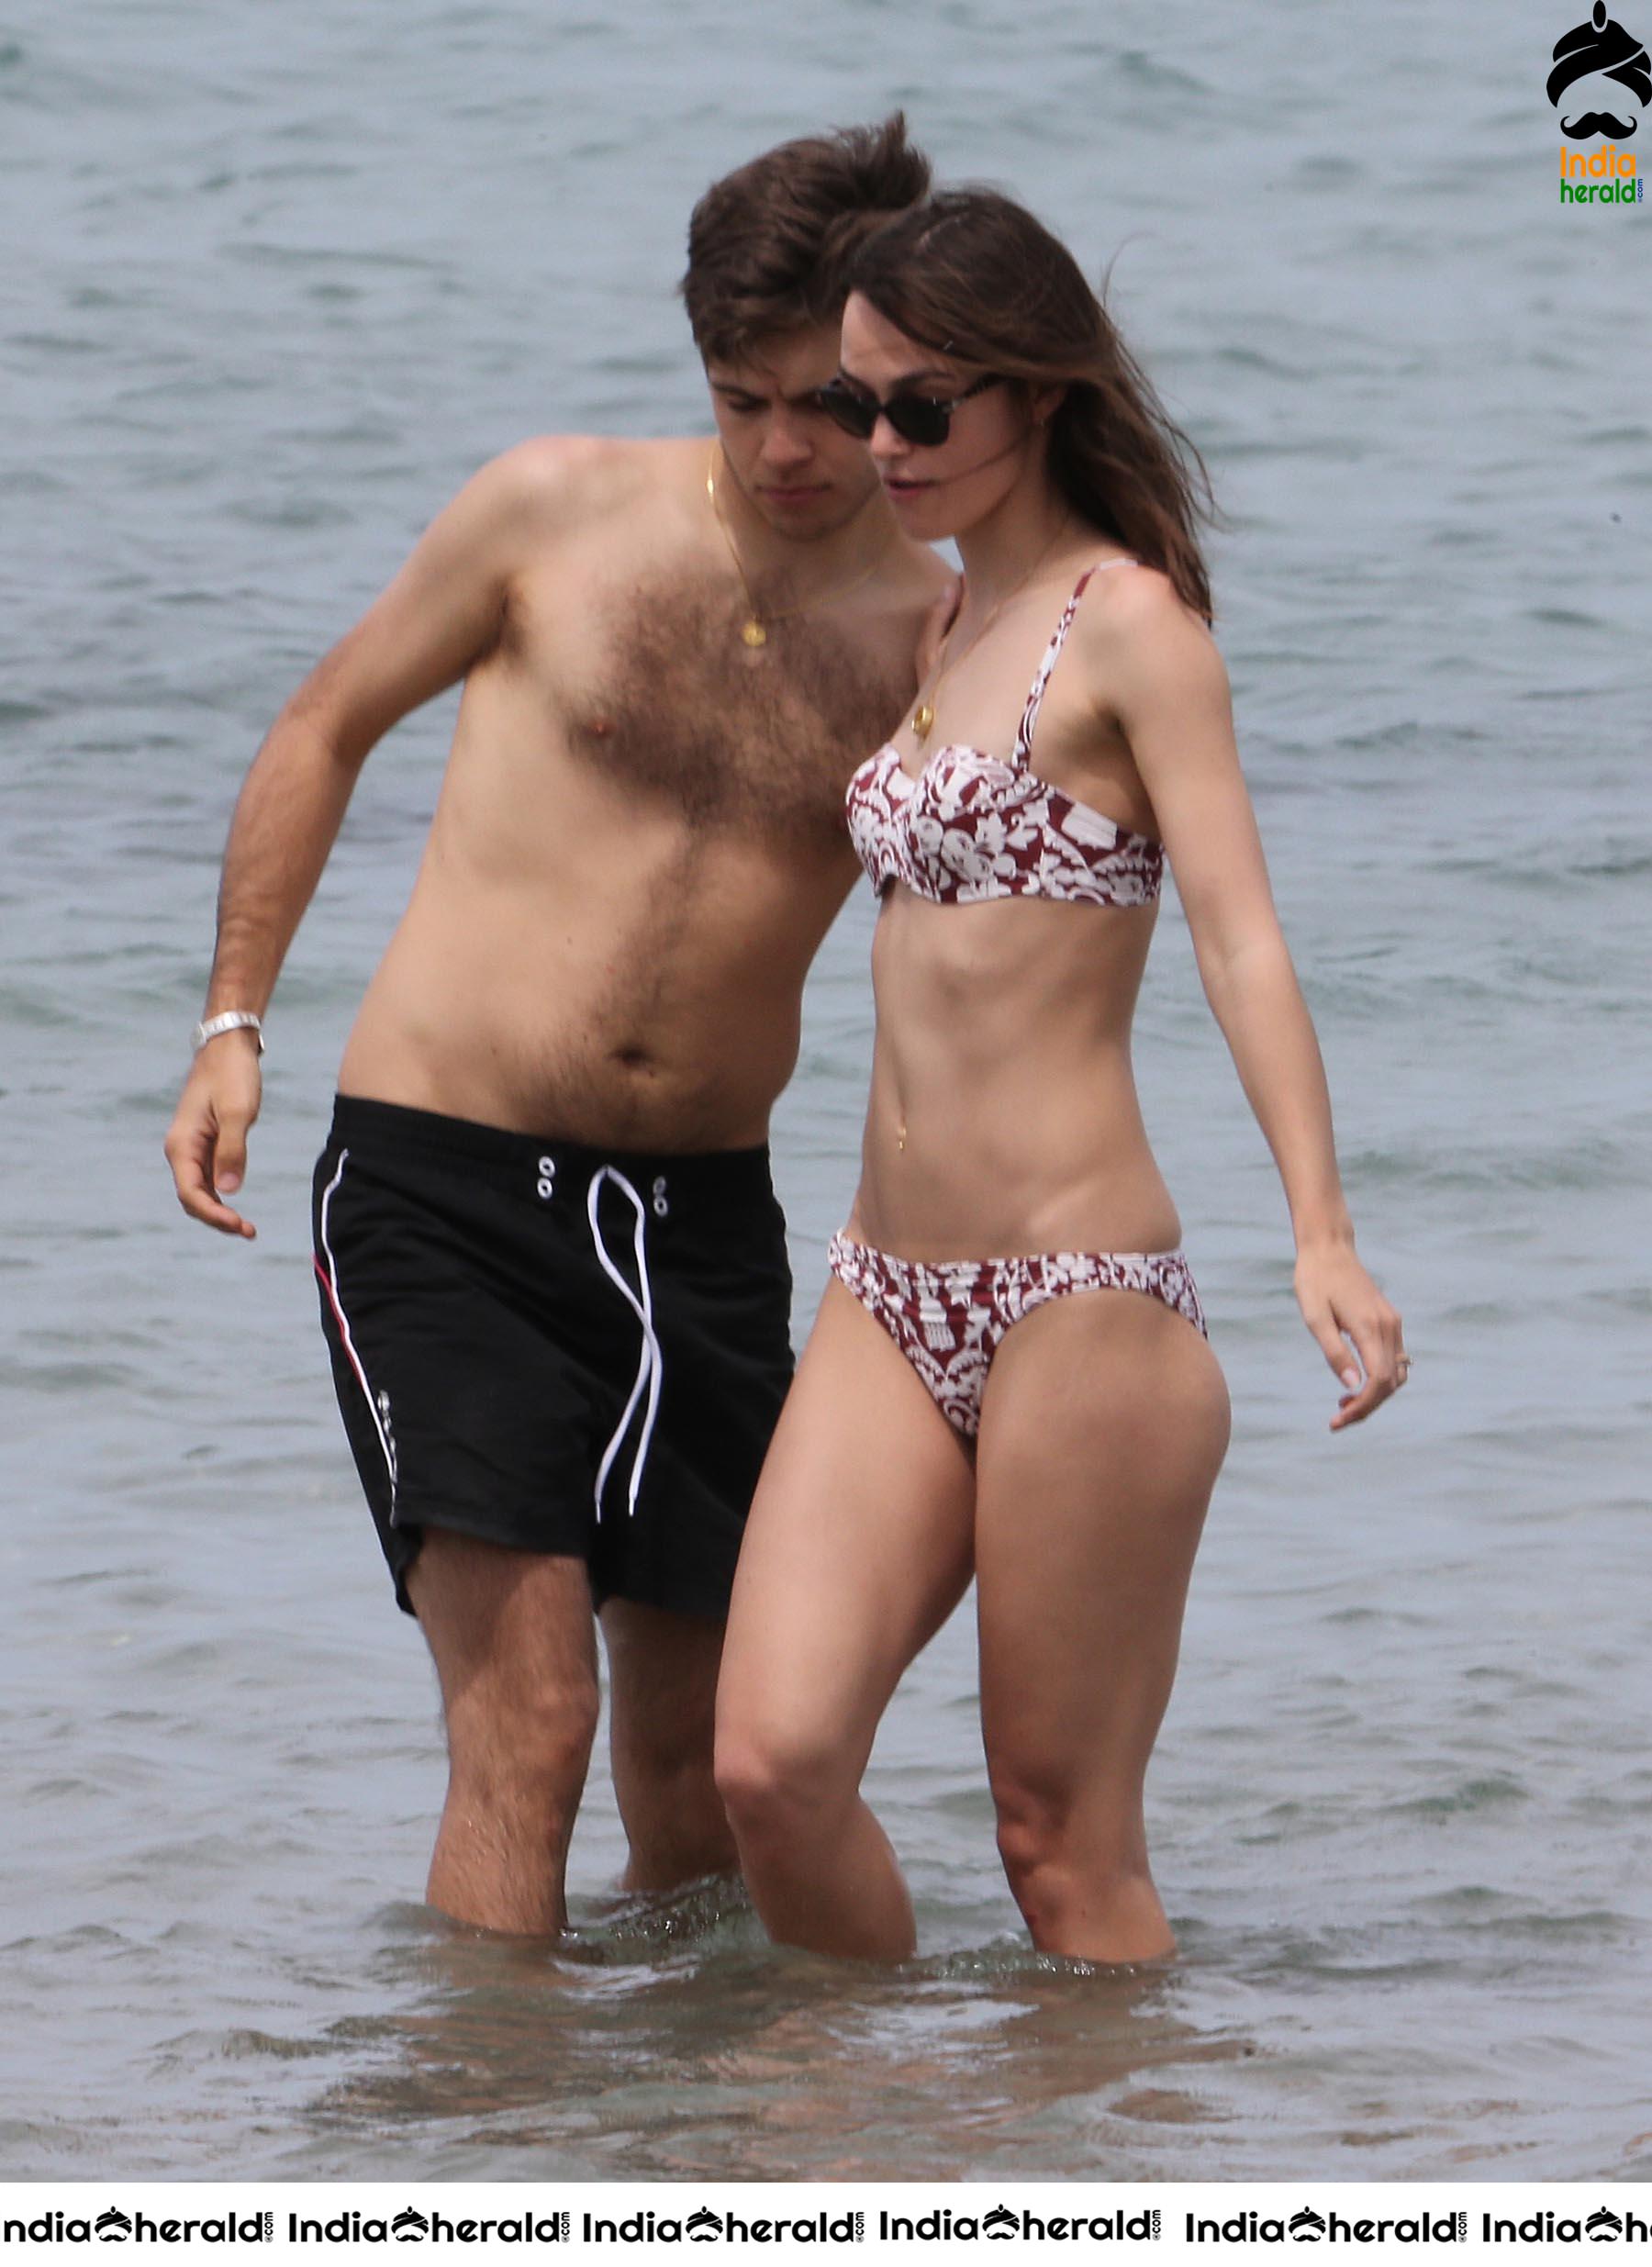 Keira Knightley Hot Photos exposing her Skinny Body in Bikini At the beach in Corsica